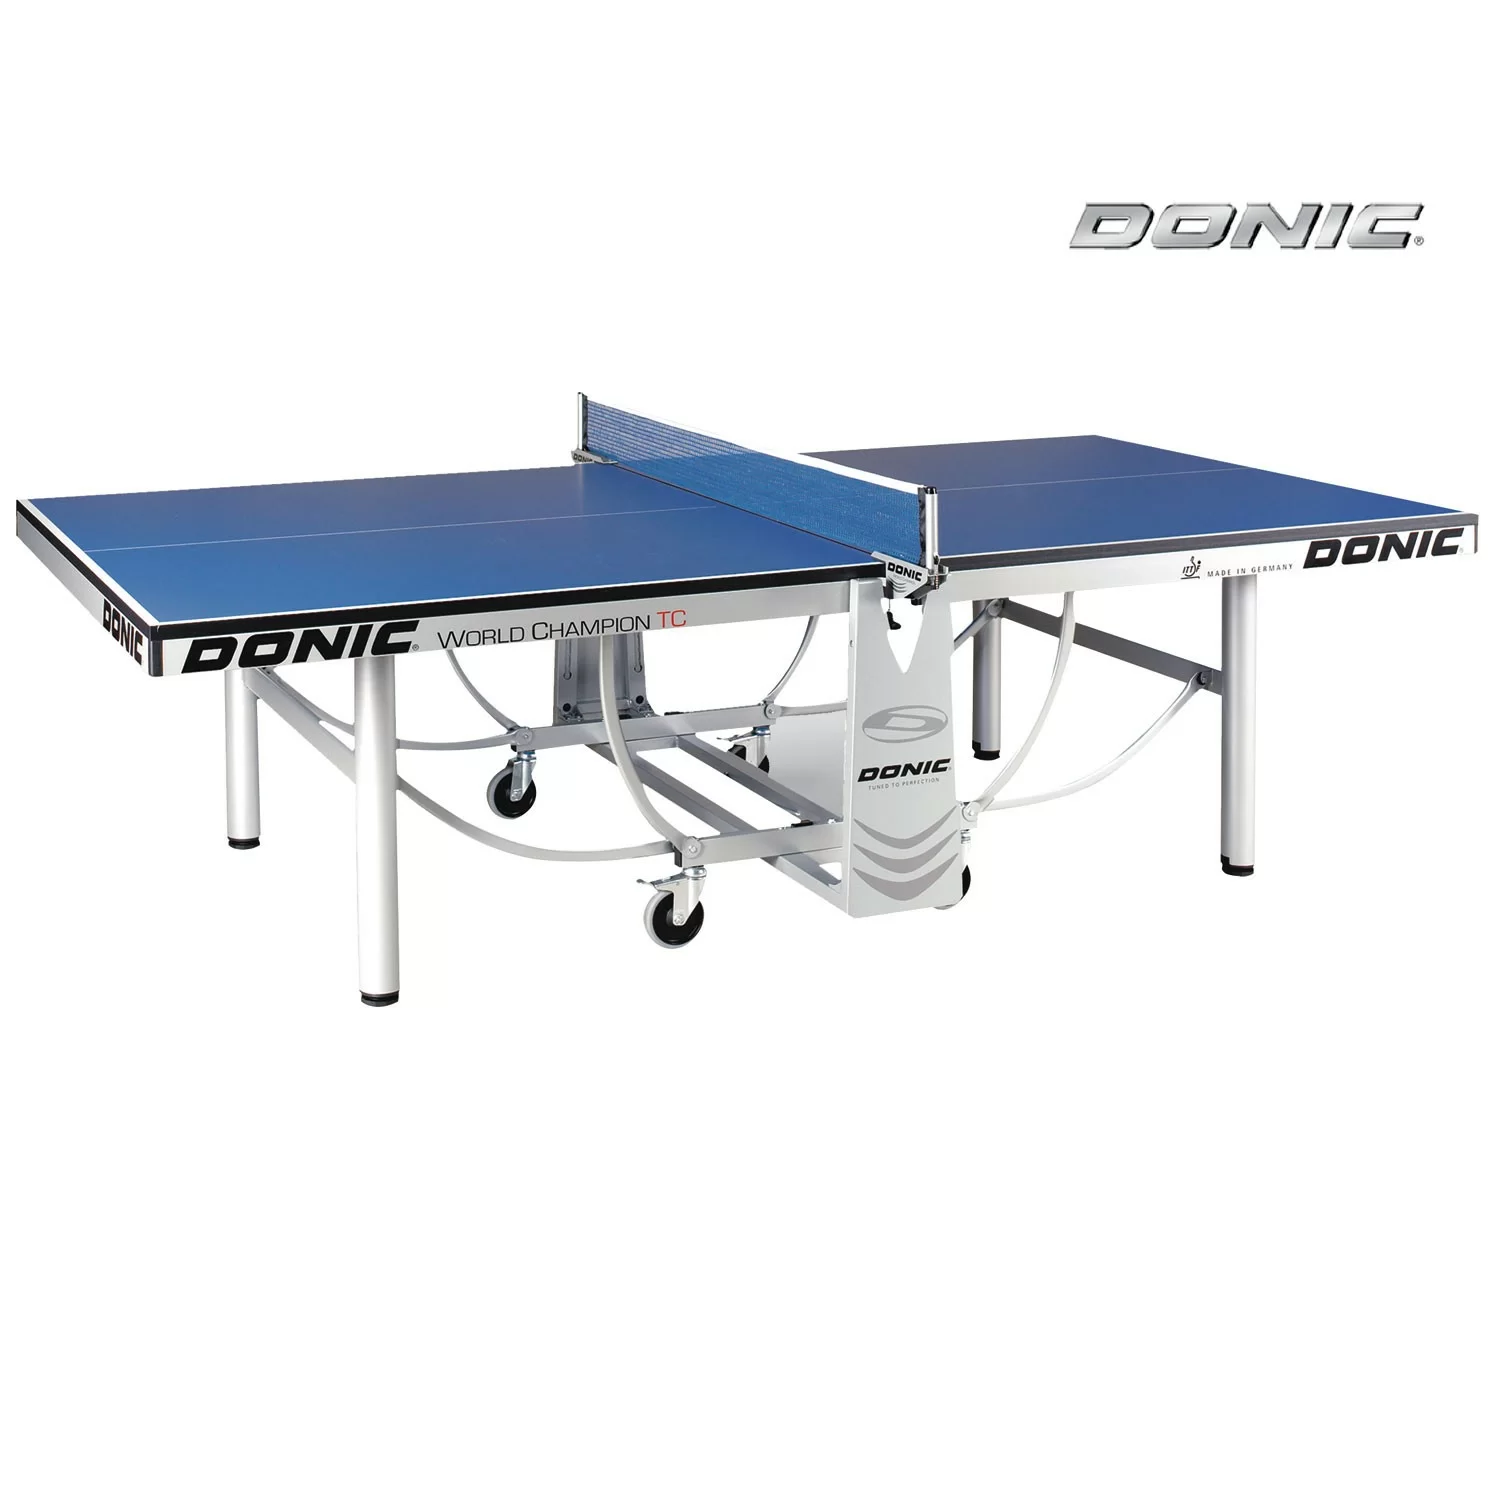 Фото Теннисный стол DONIC WORLD CHAMPION TC BLUE (без сетки) 400240-B со склада магазина СпортСЕ